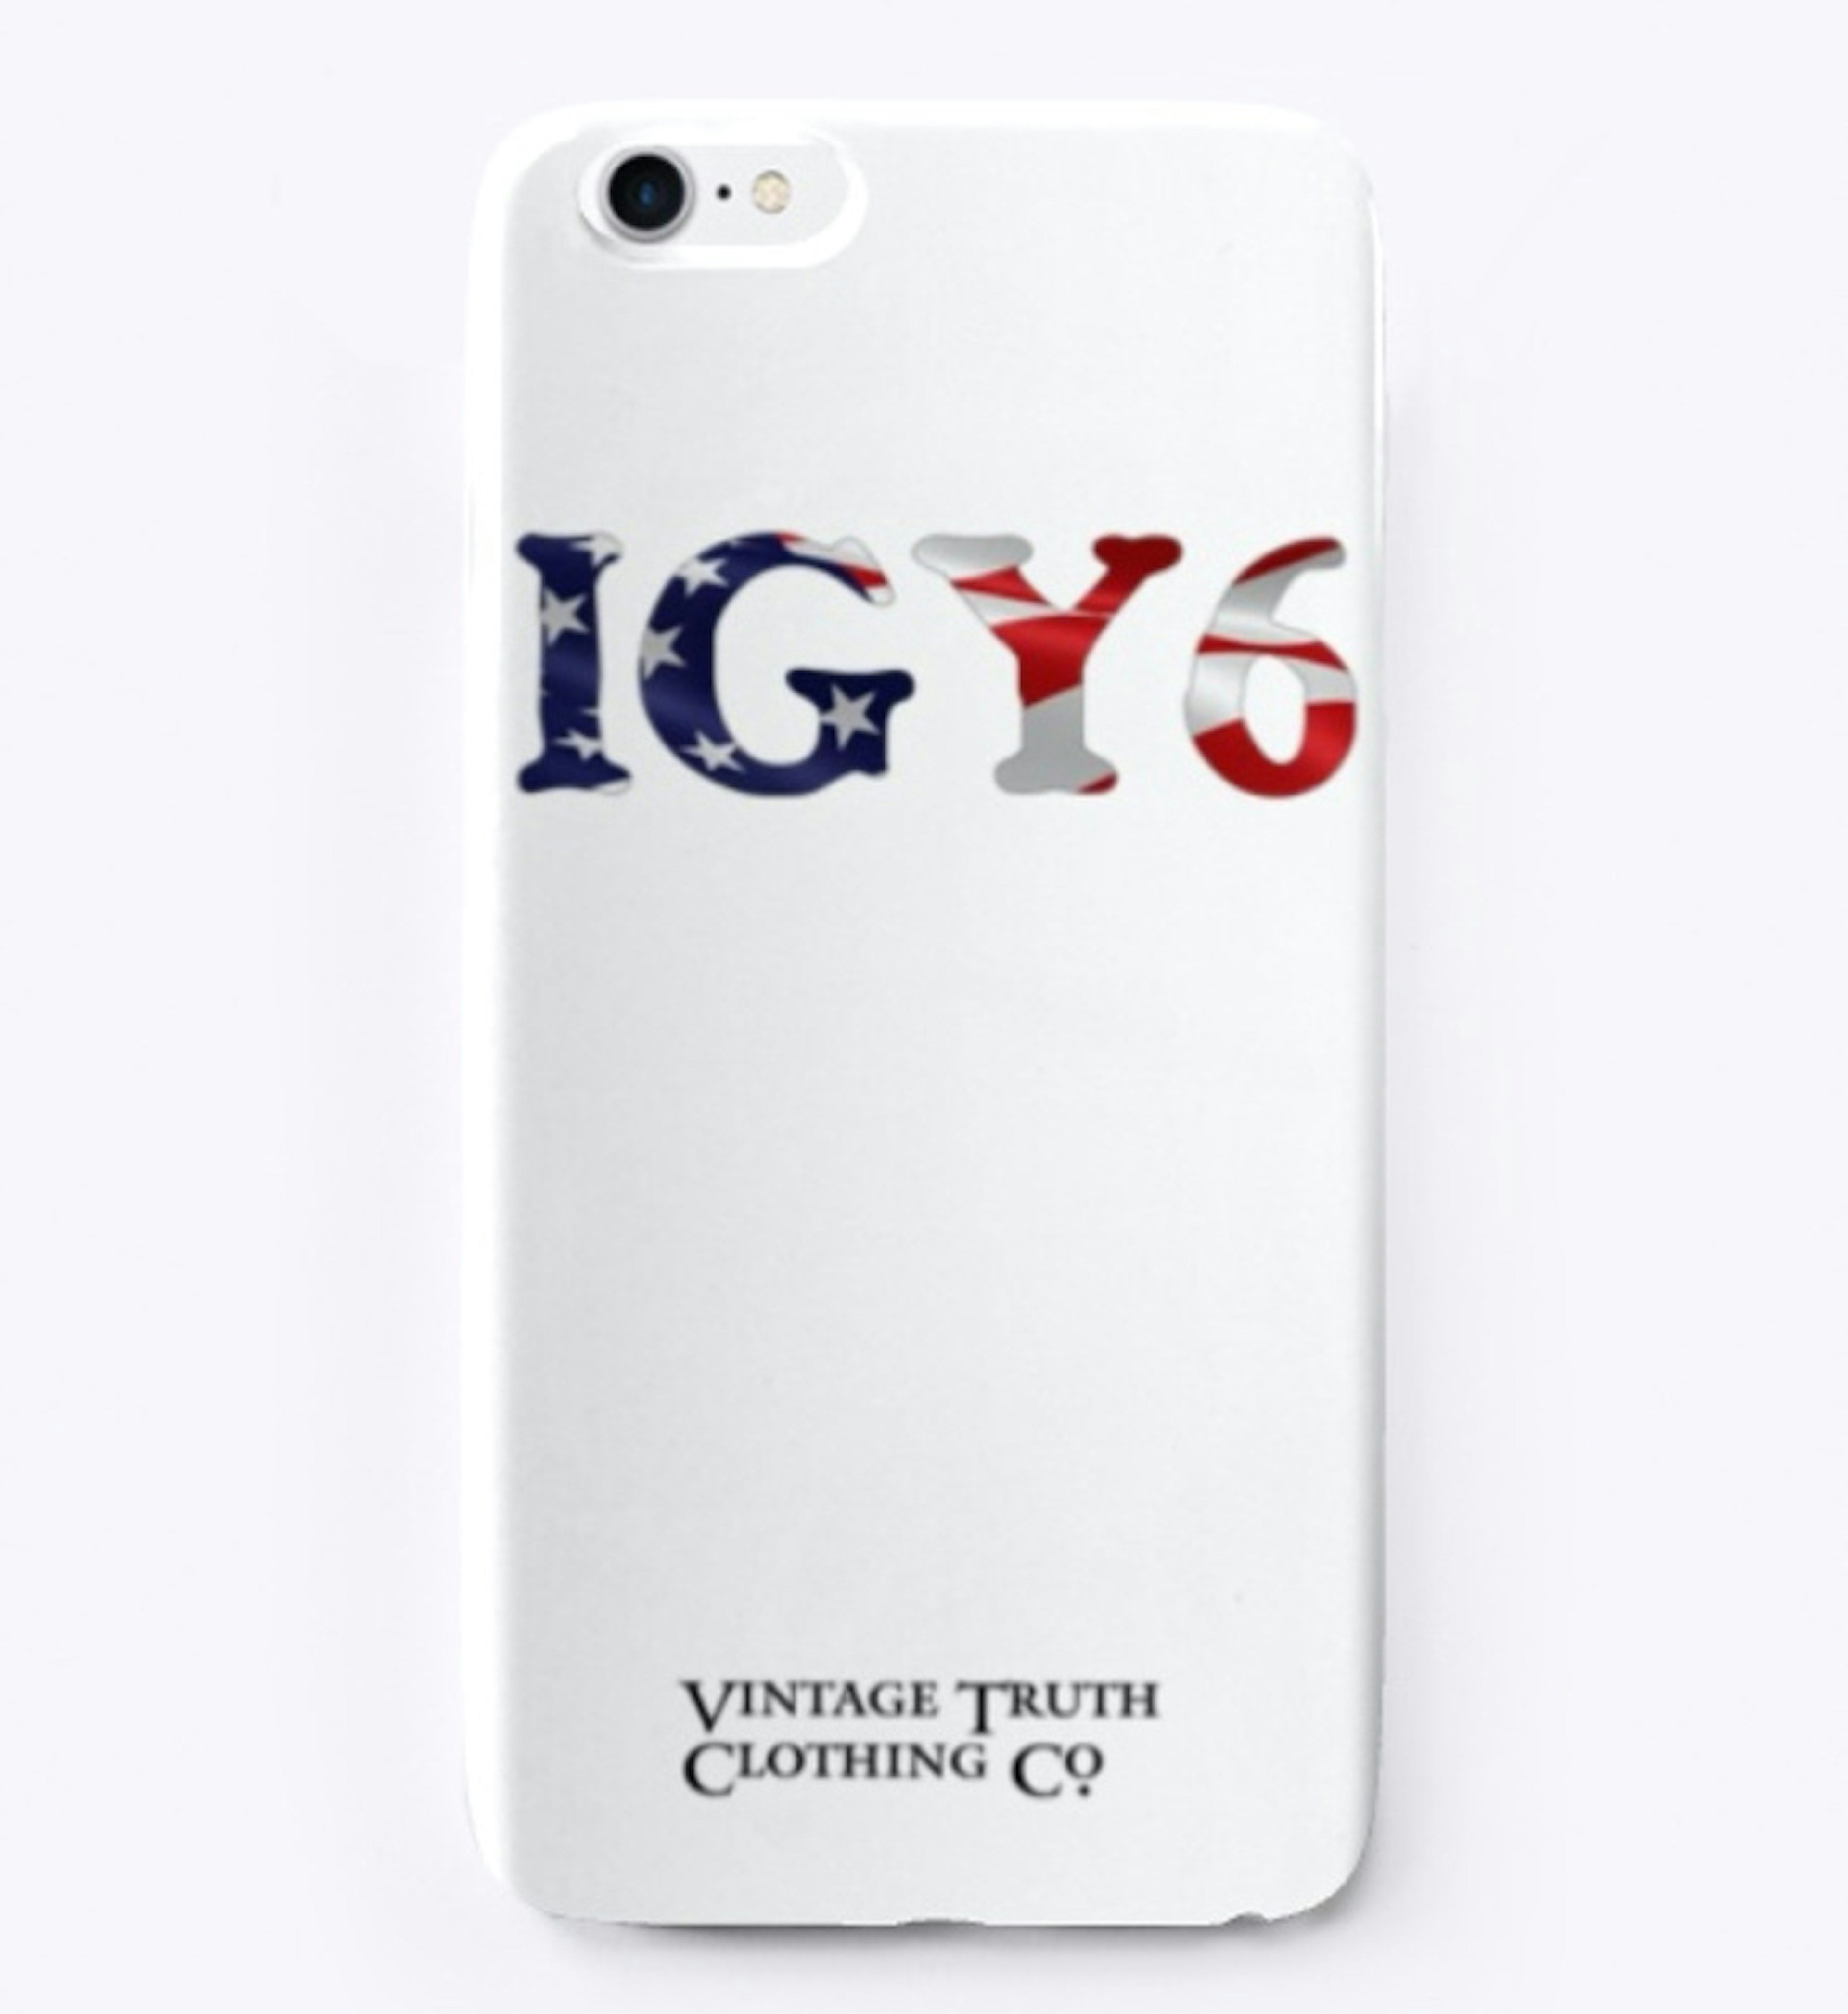 IGY6 USA Phone